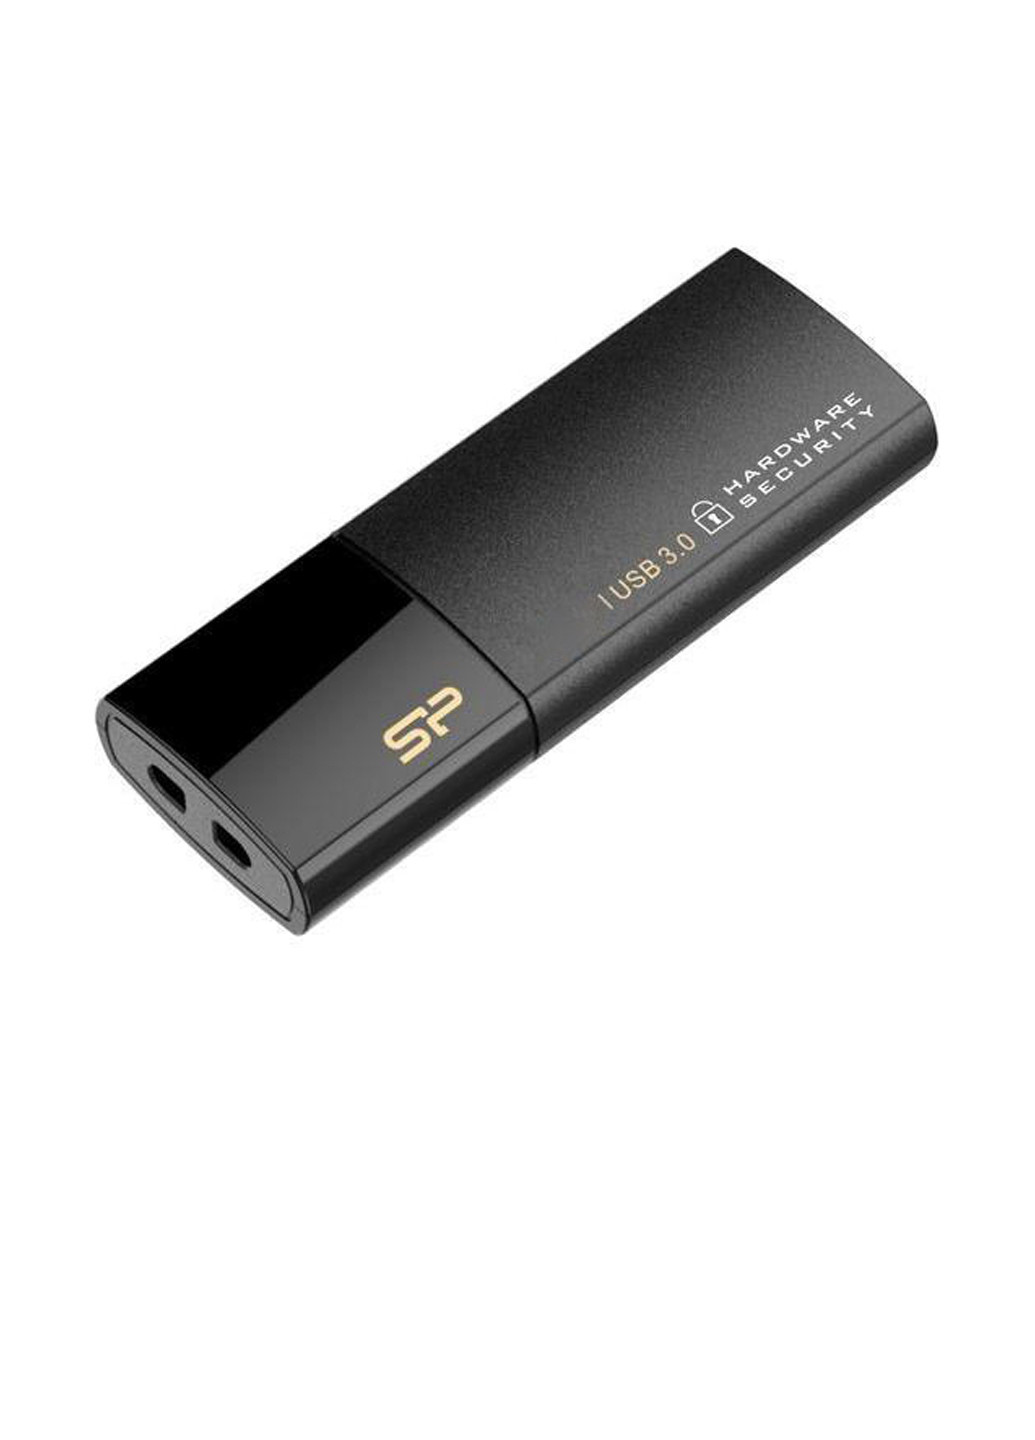 Флеш пам'ять USB 64GB Secure G50 USB 3.0 (SP064GBUF3G50V1K) Silicon Power флеш память usb silicon power 64gb secure g50 usb 3.0 (sp064gbuf3g50v1k) (136742719)